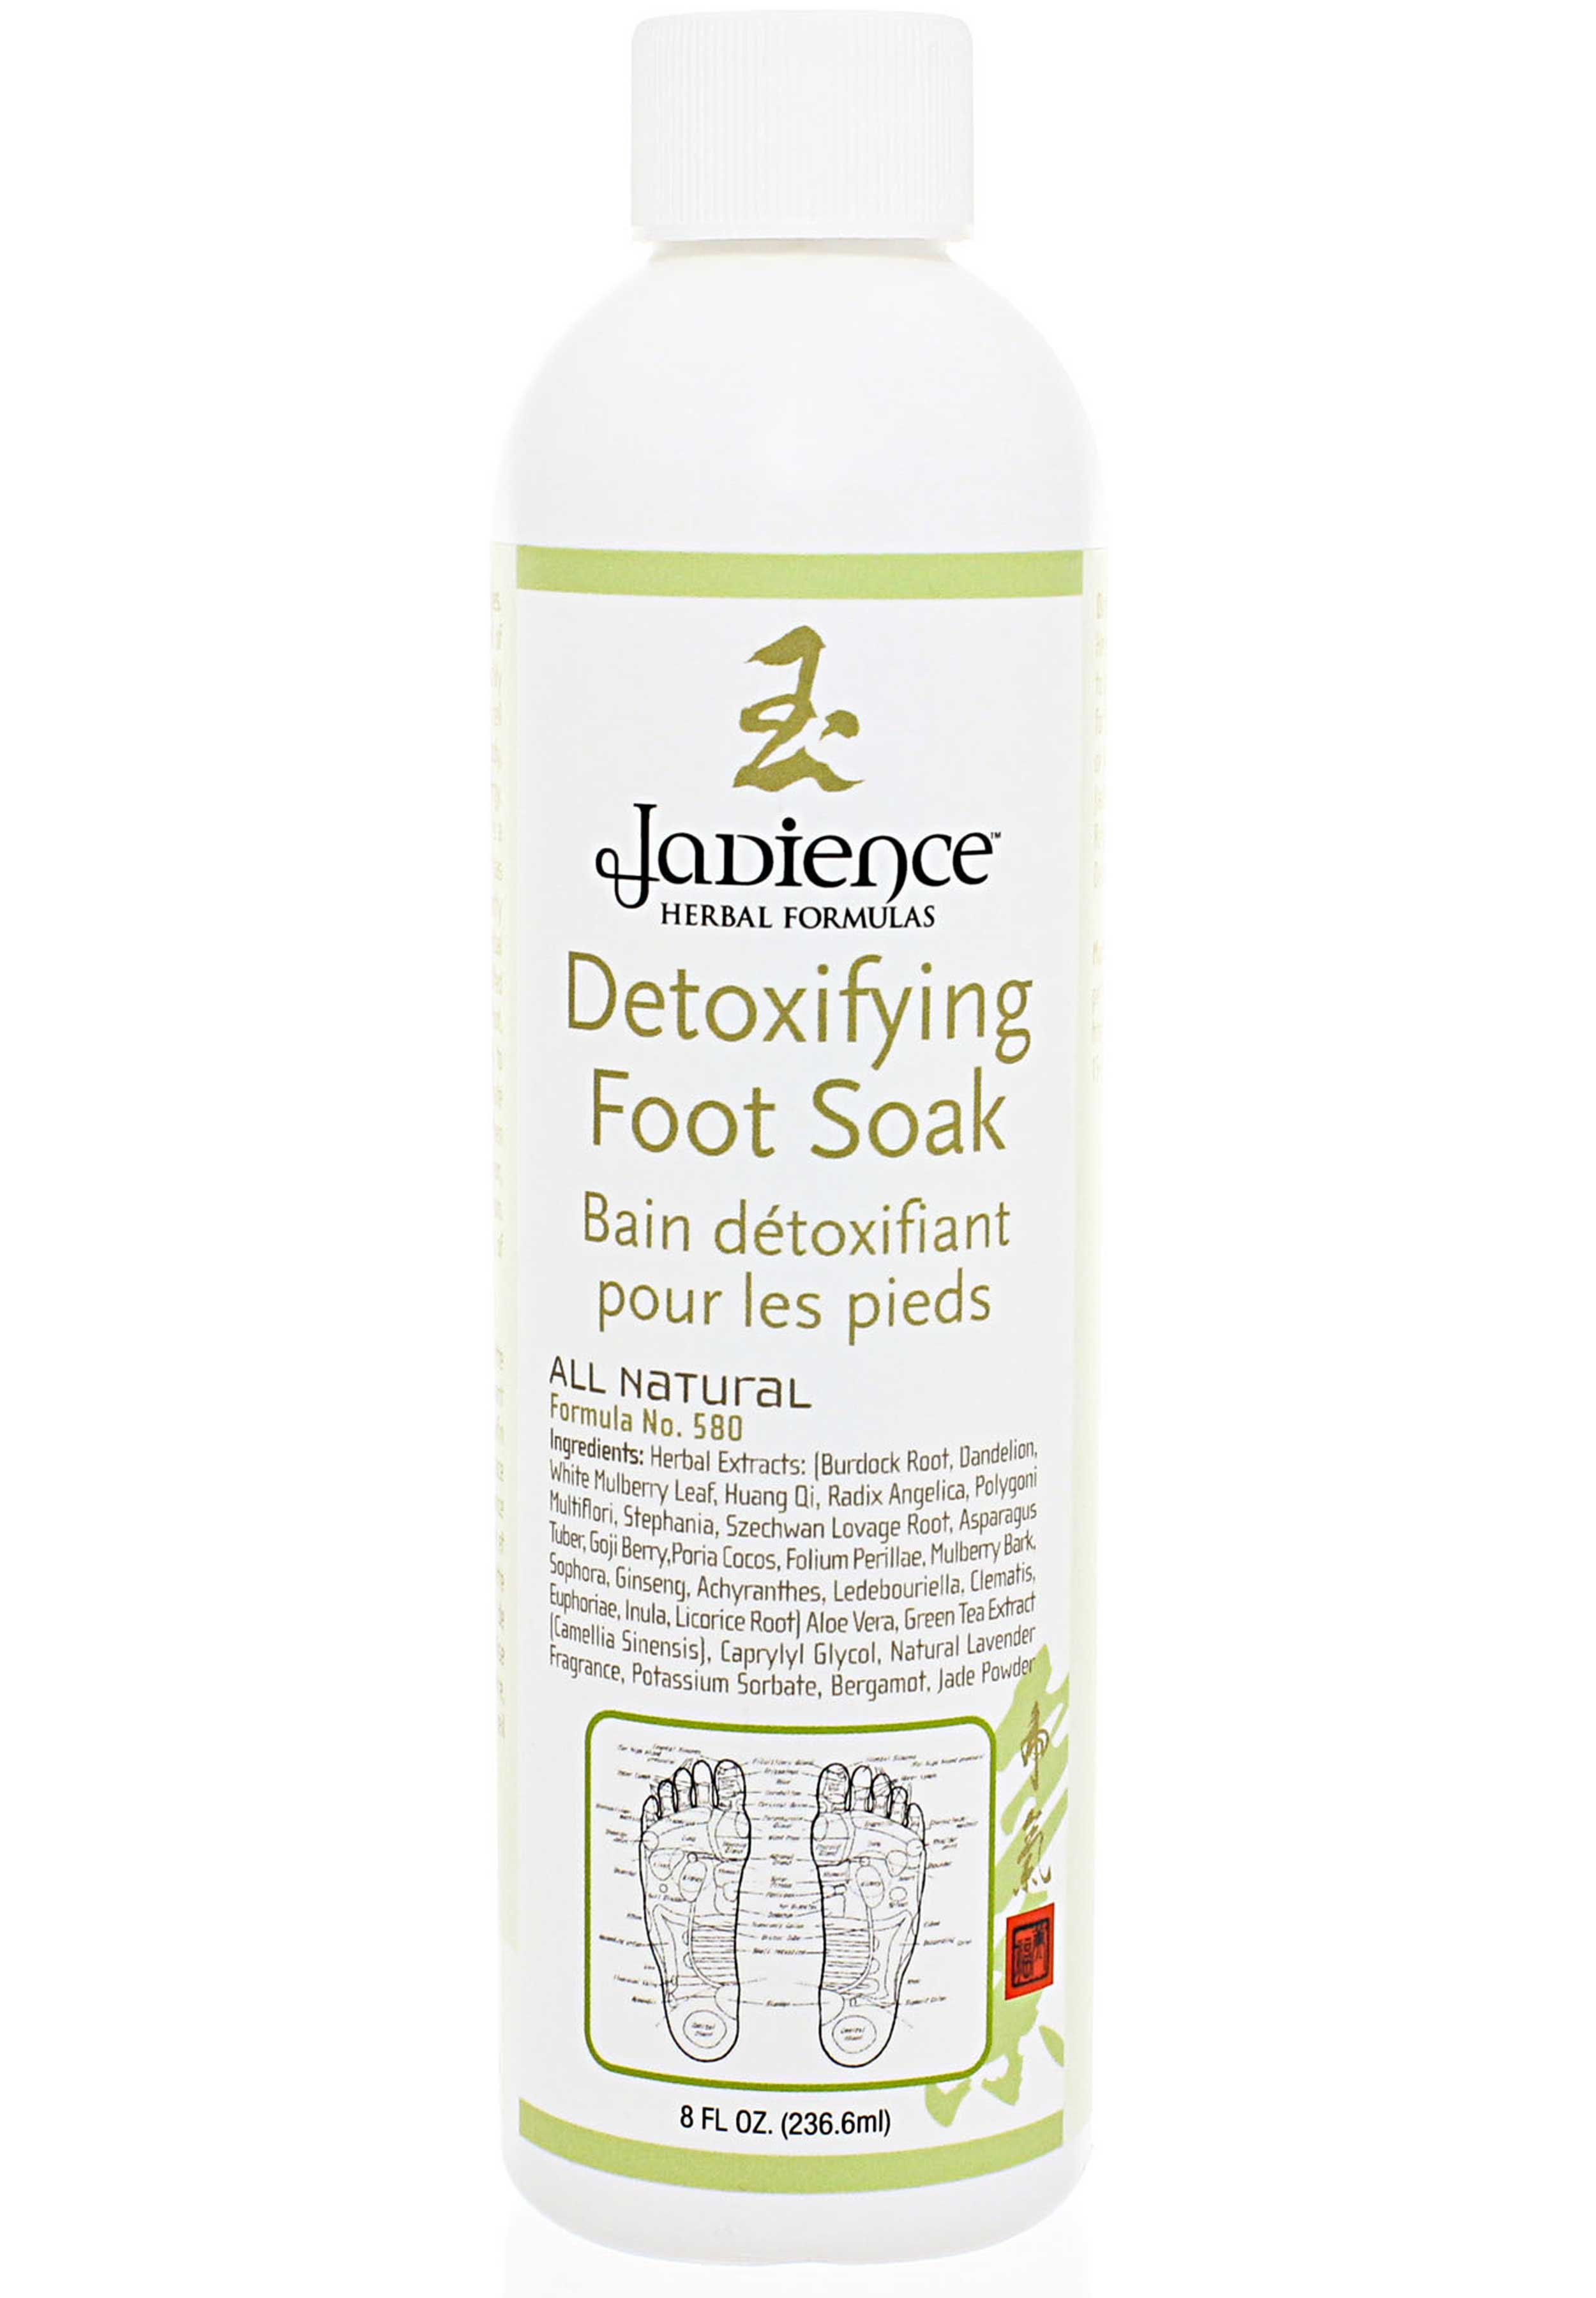 Jadience Herbal Formulas Detoxifying Foot Soak